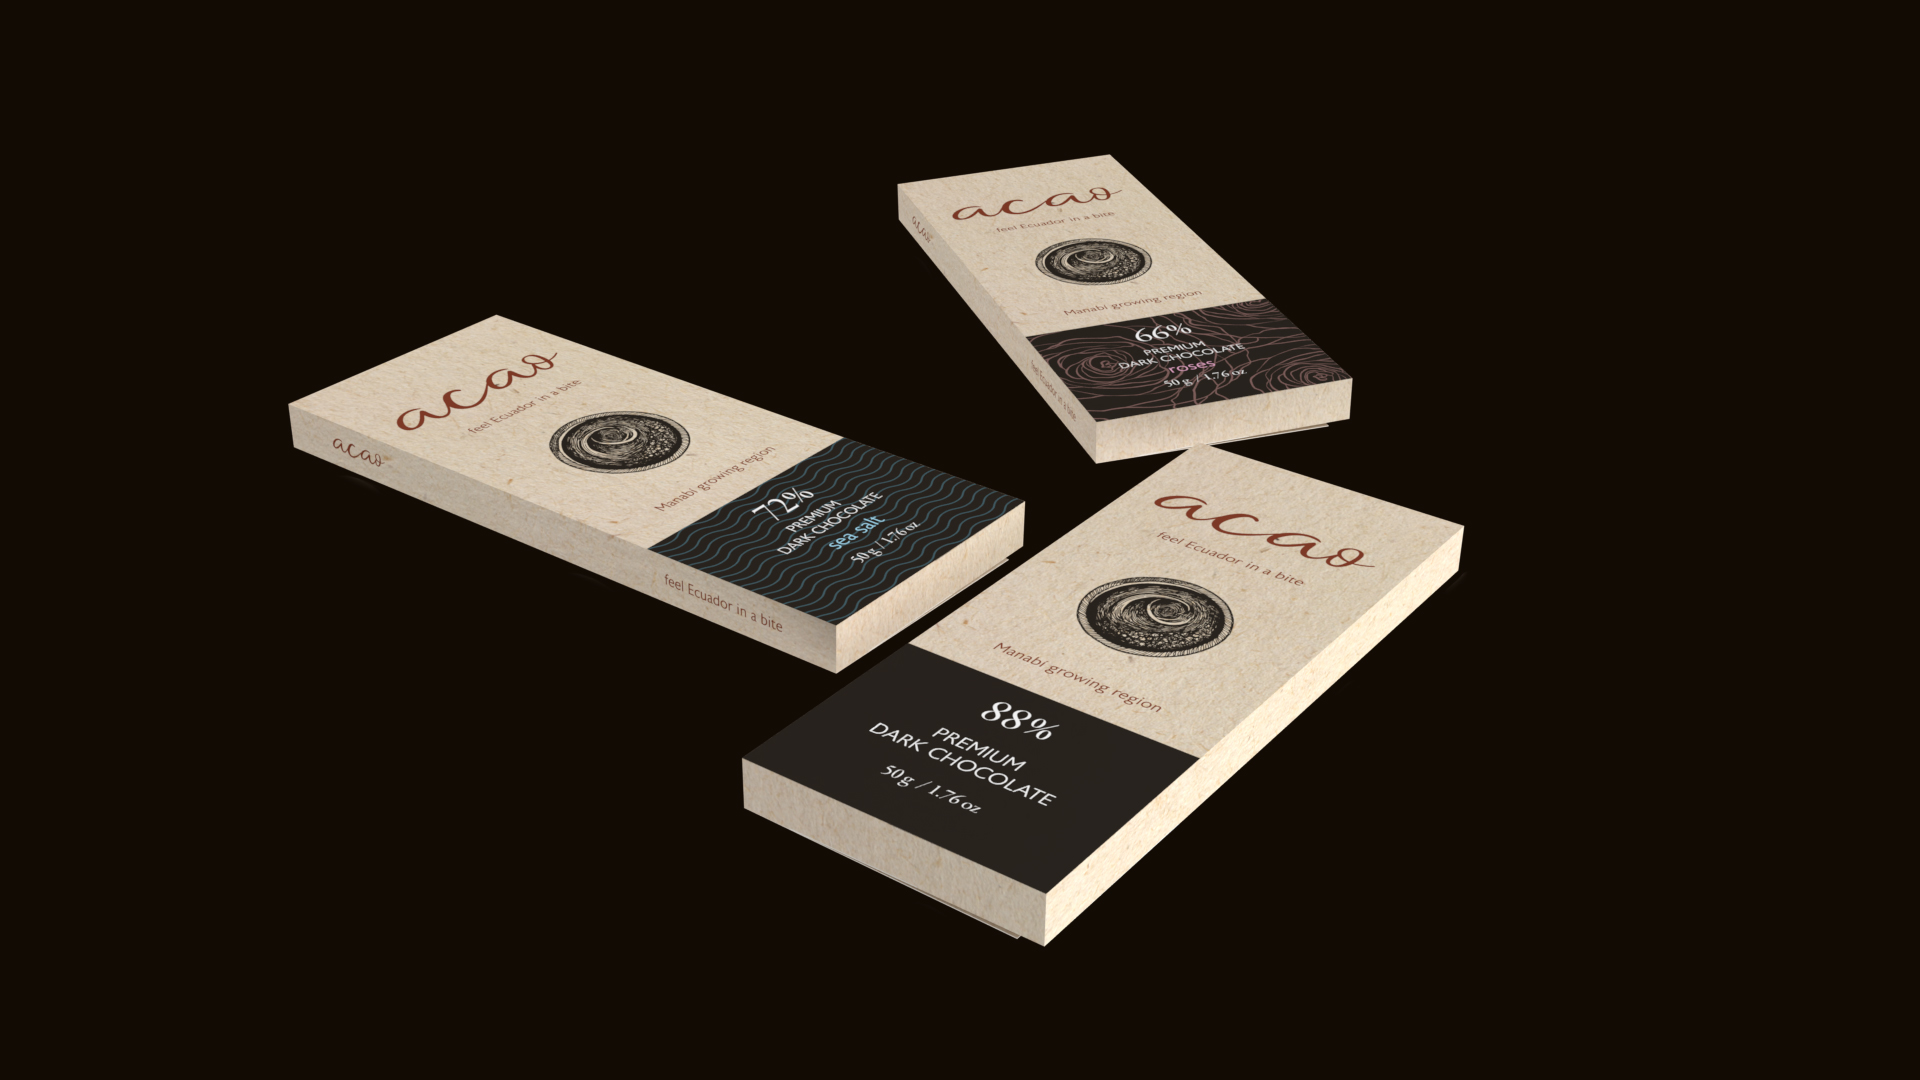 Diseño de etiqueta - Acao